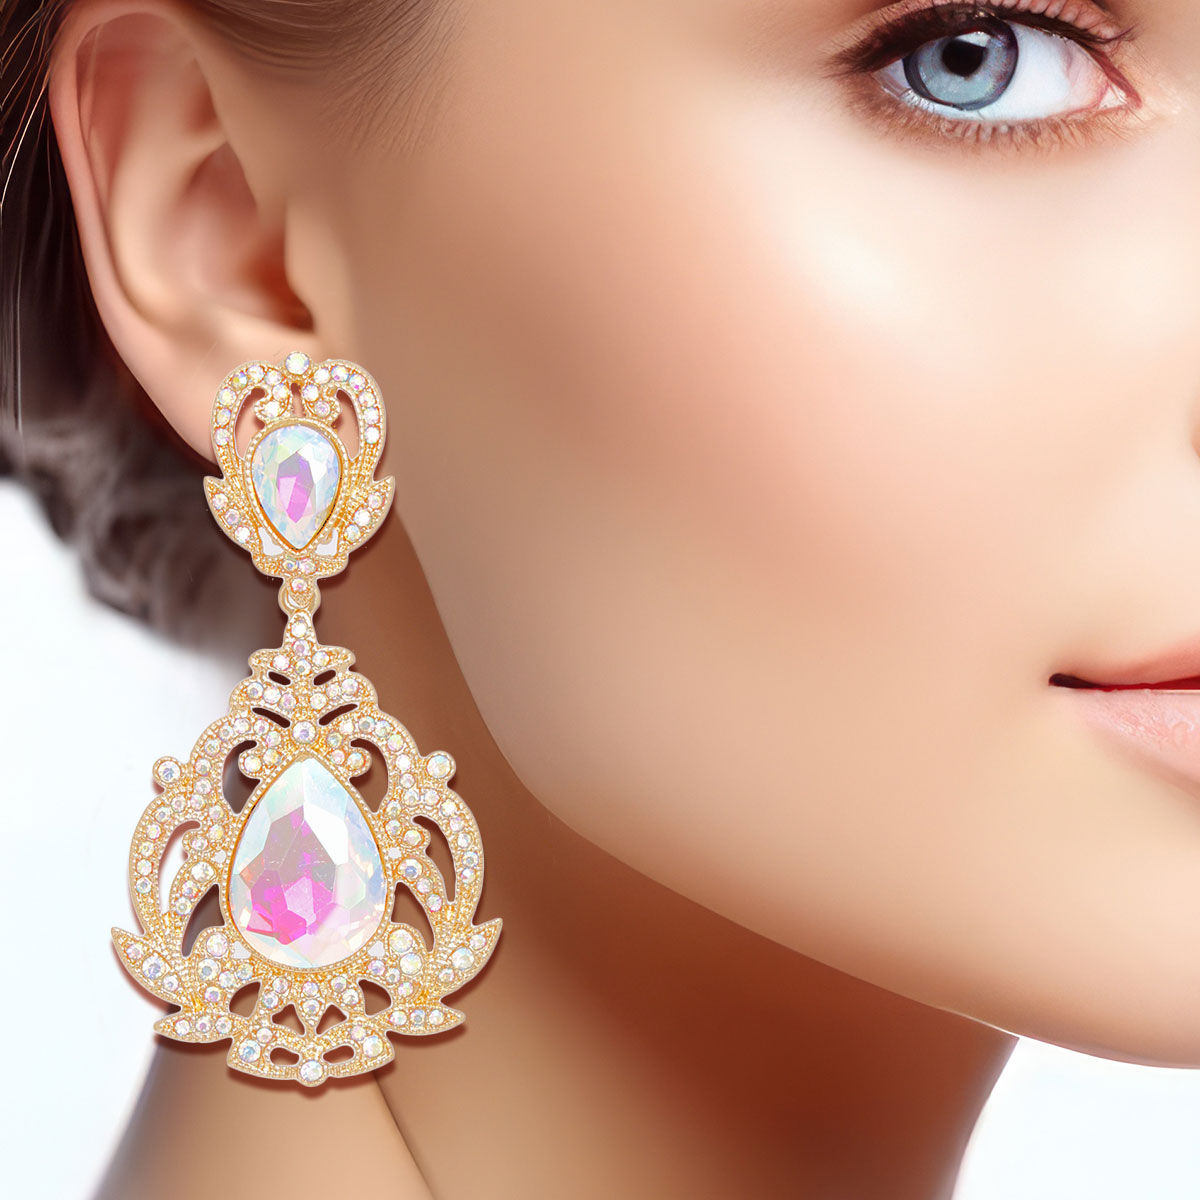 Clip On AURBO Large Crystal Earrings for Women